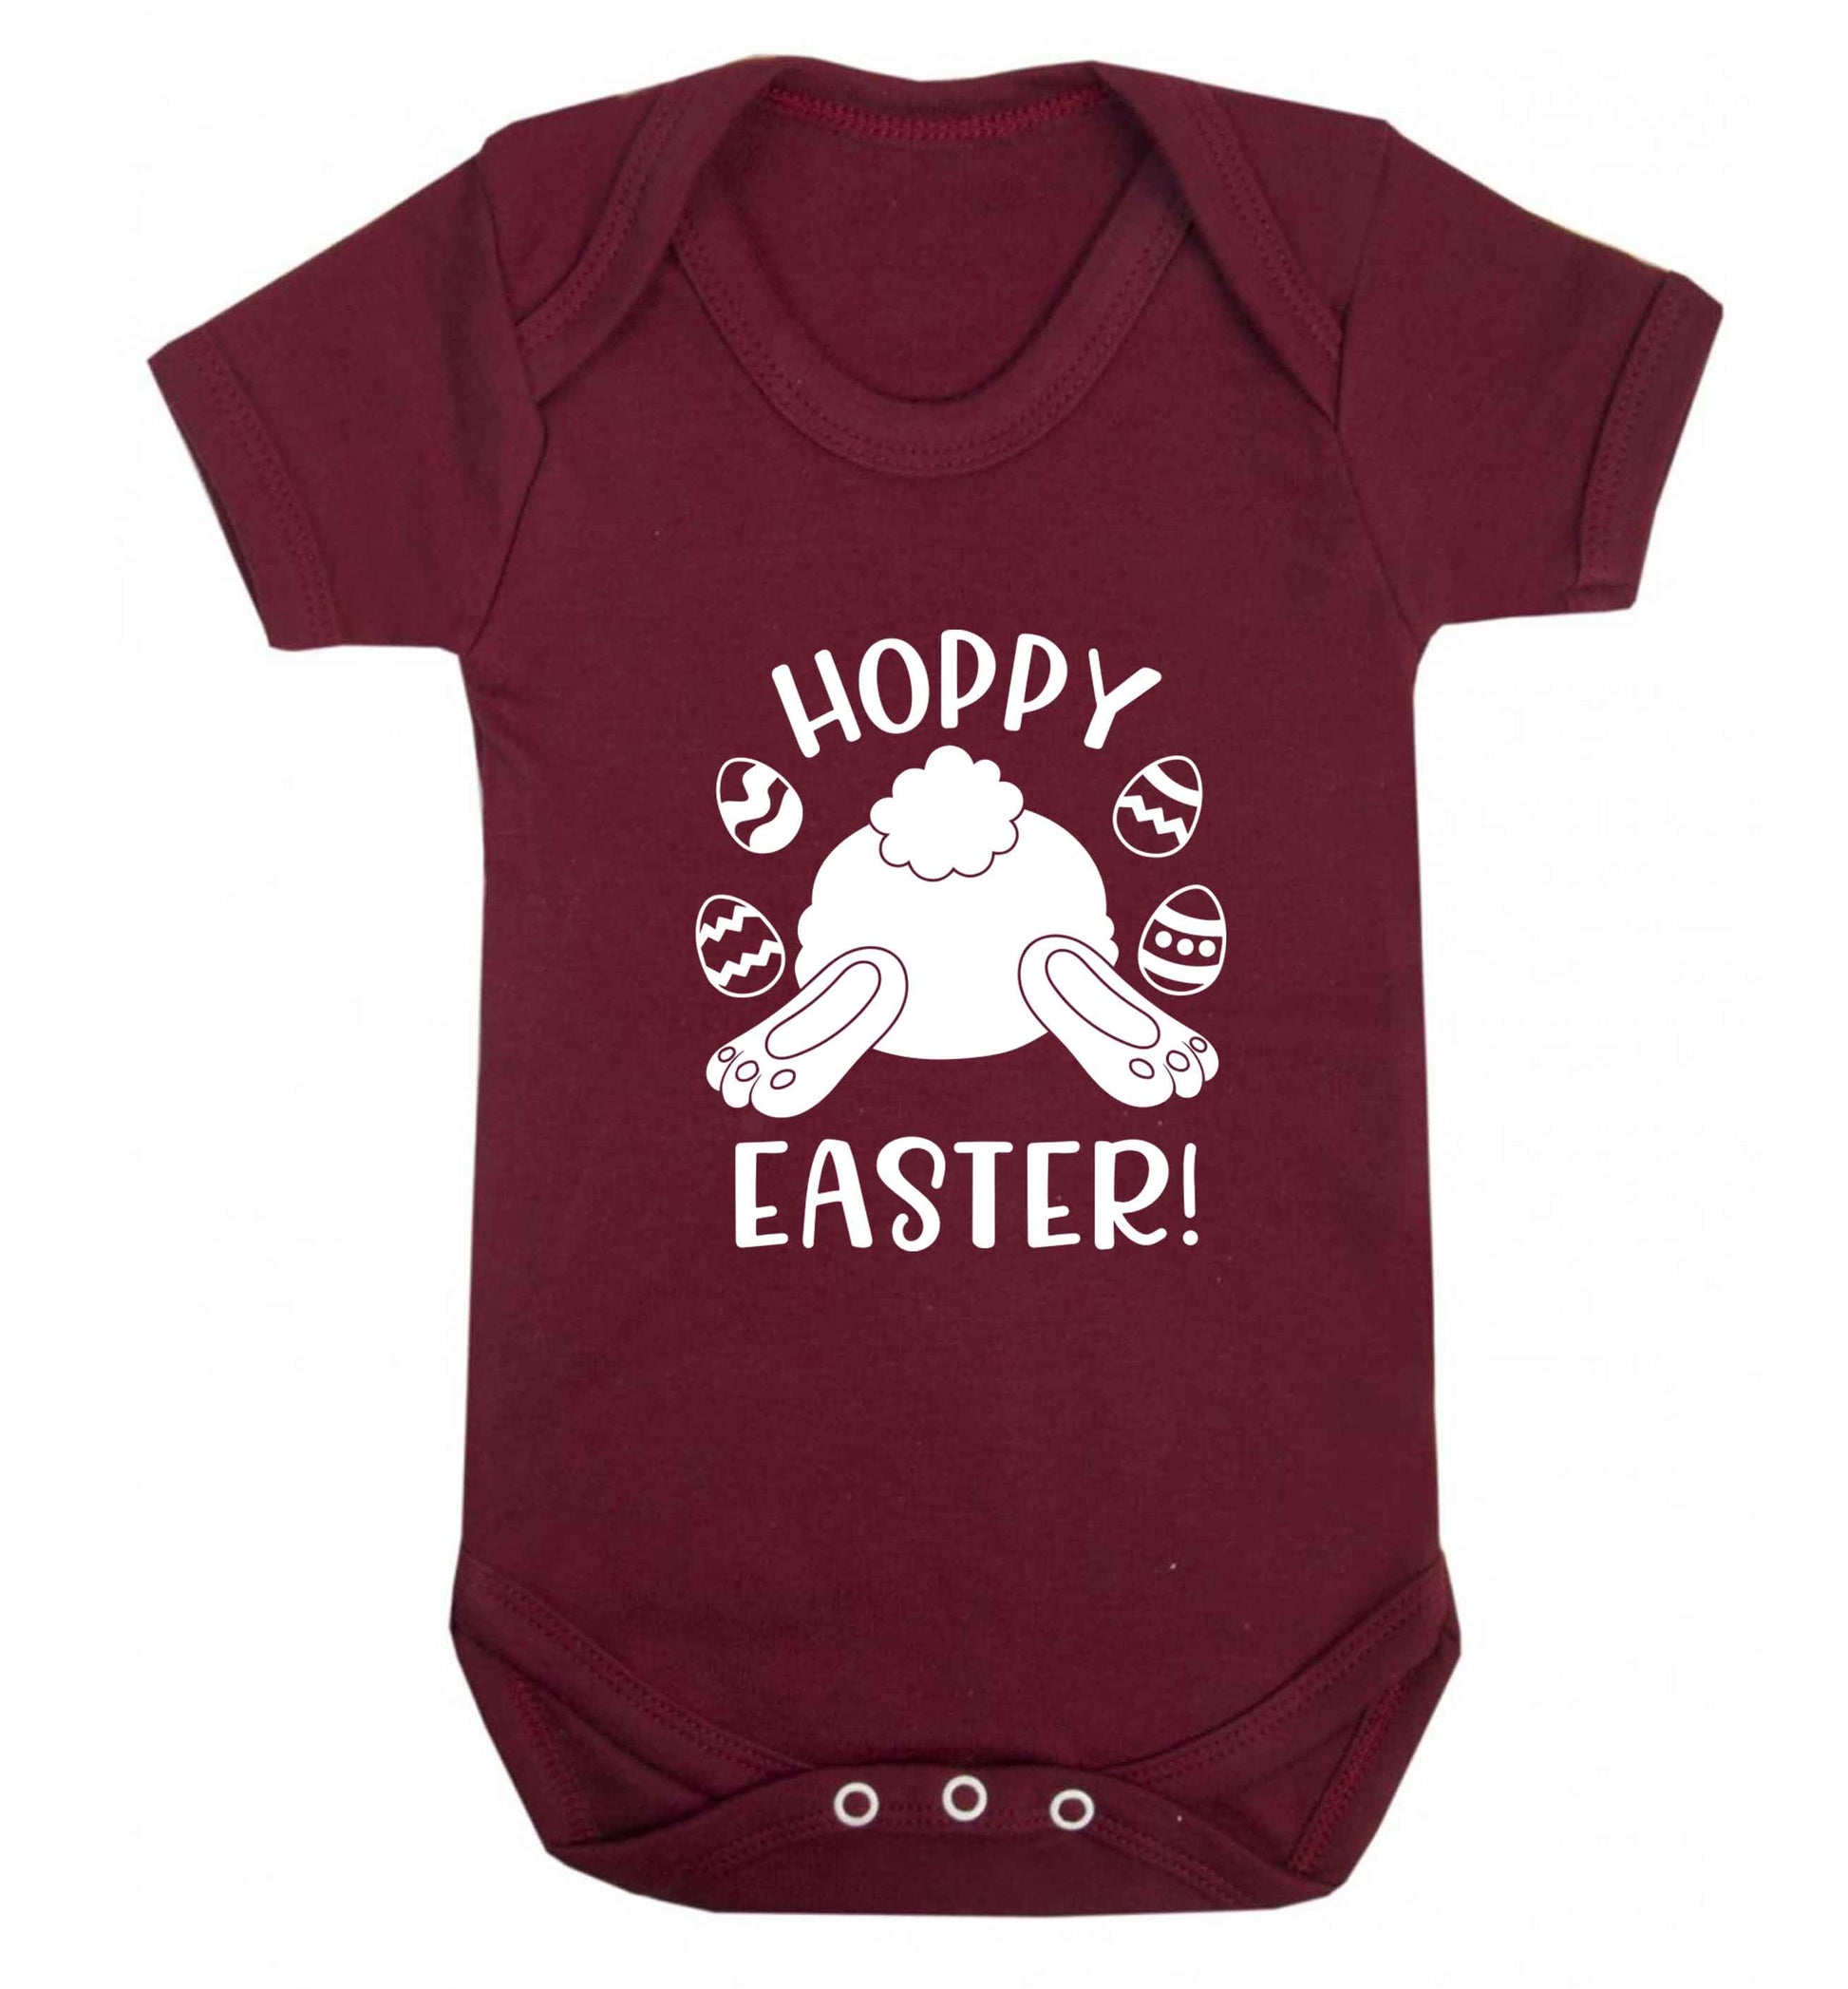 Hoppy Easter baby vest maroon 18-24 months